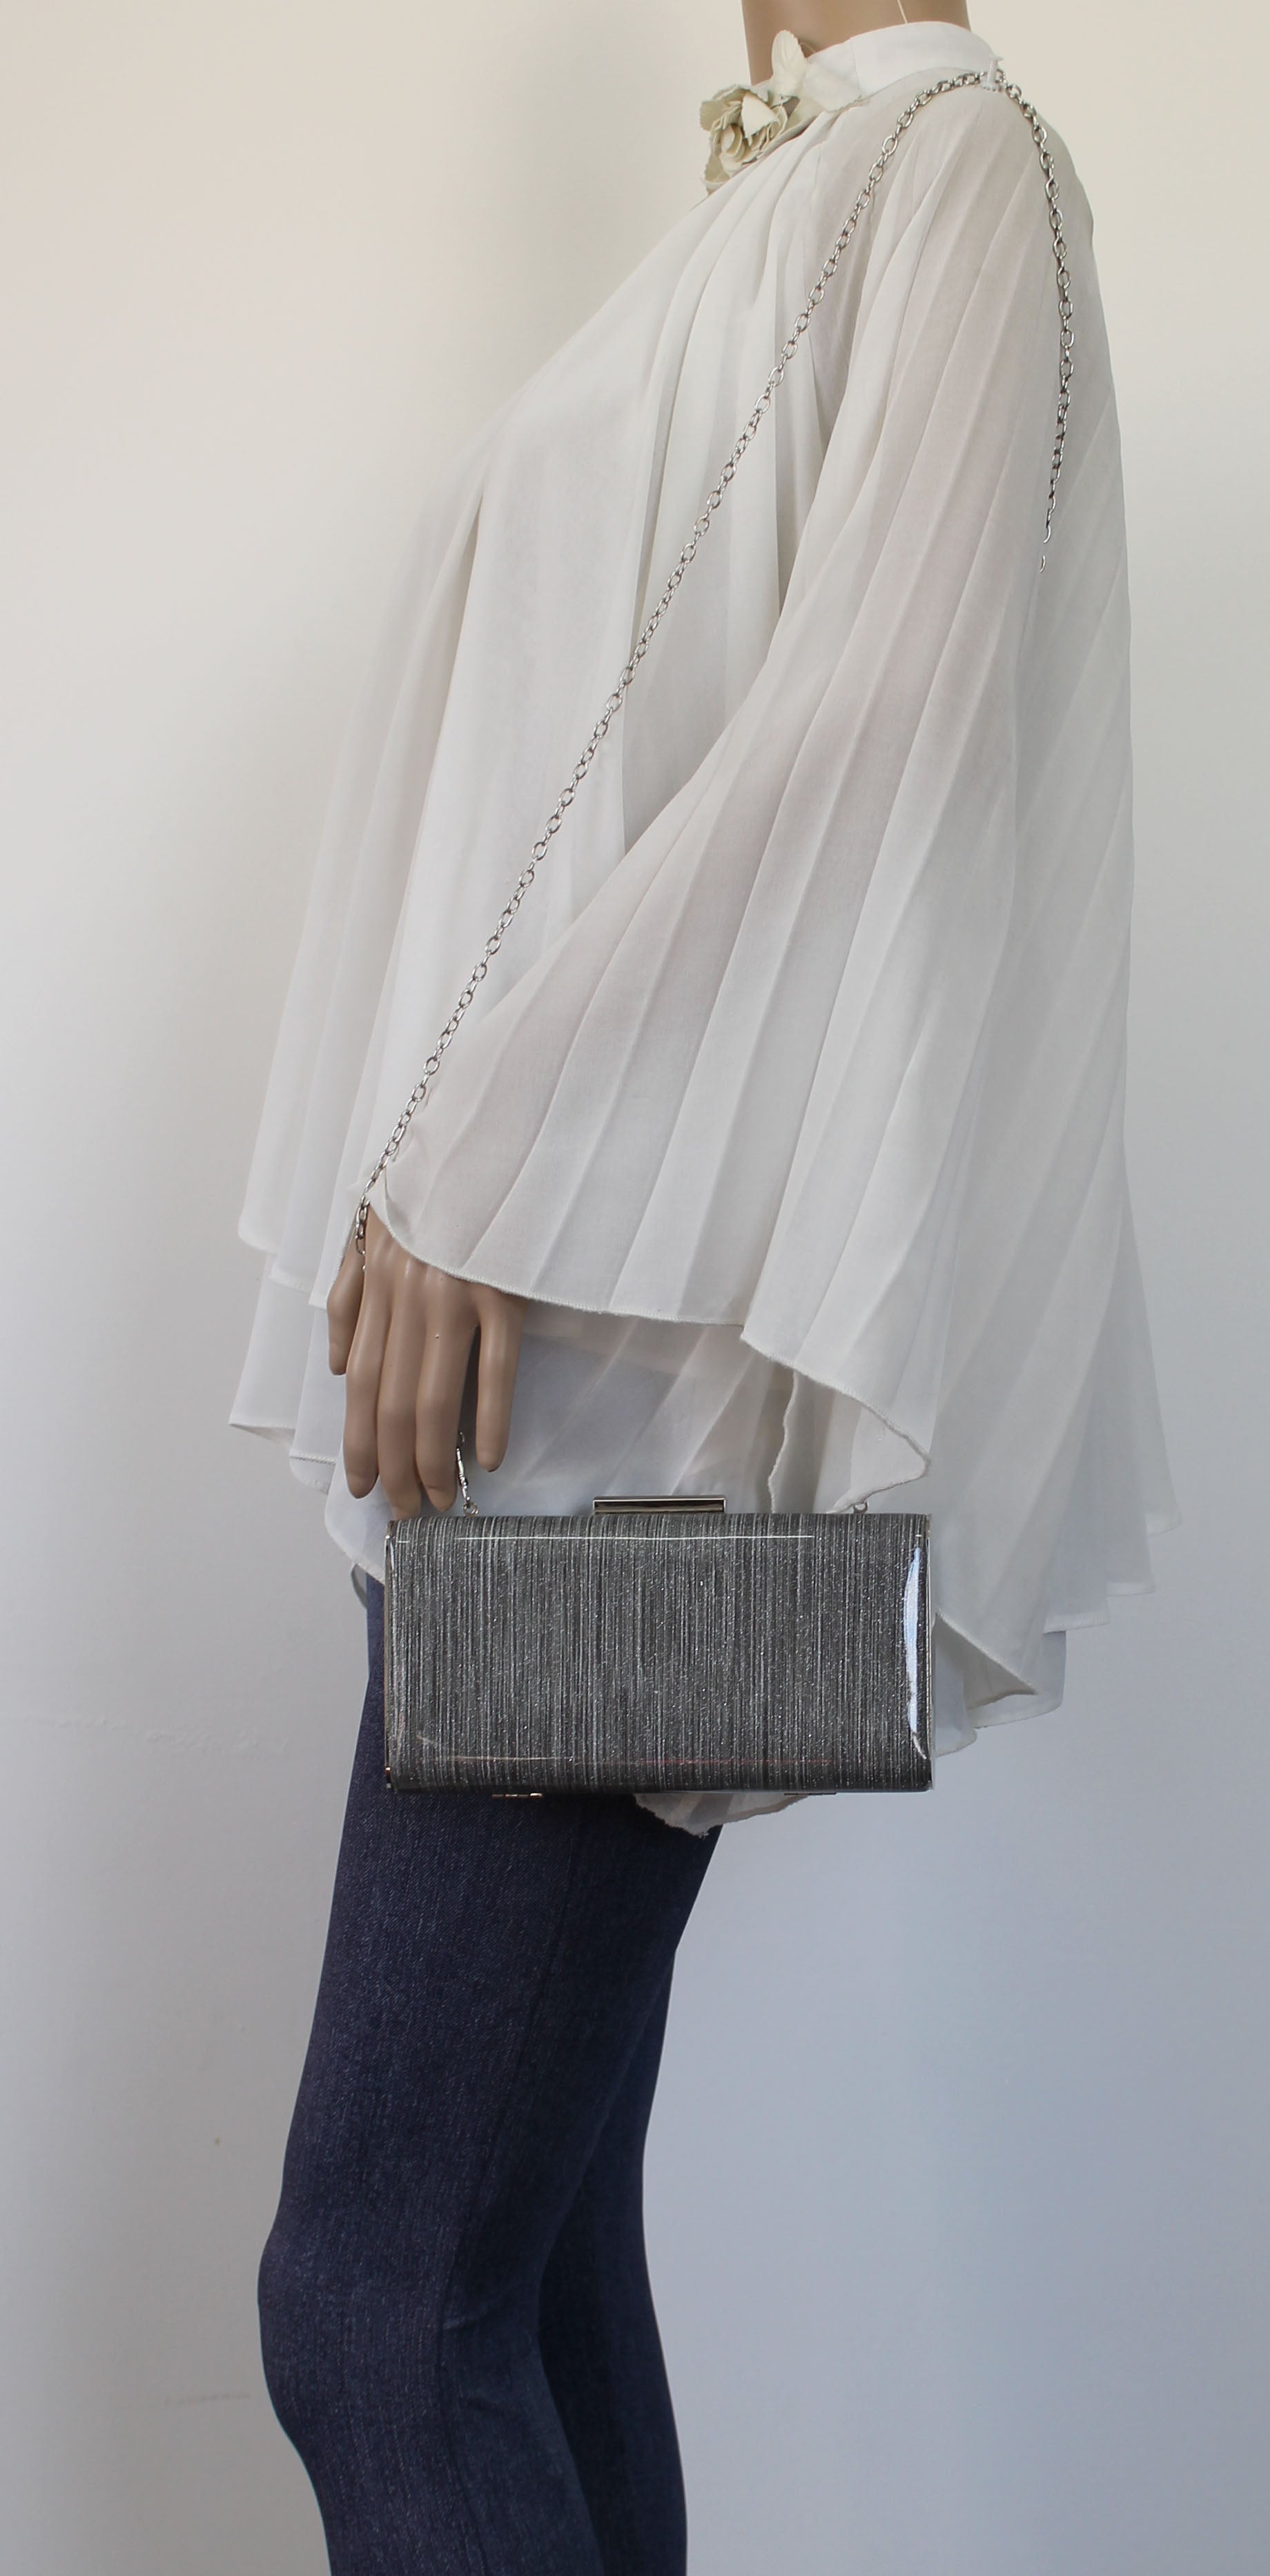 SWANKYSWANS Melissa Clutch Bag Silver Cute Cheap Clutch Bag For Weddings School and Work